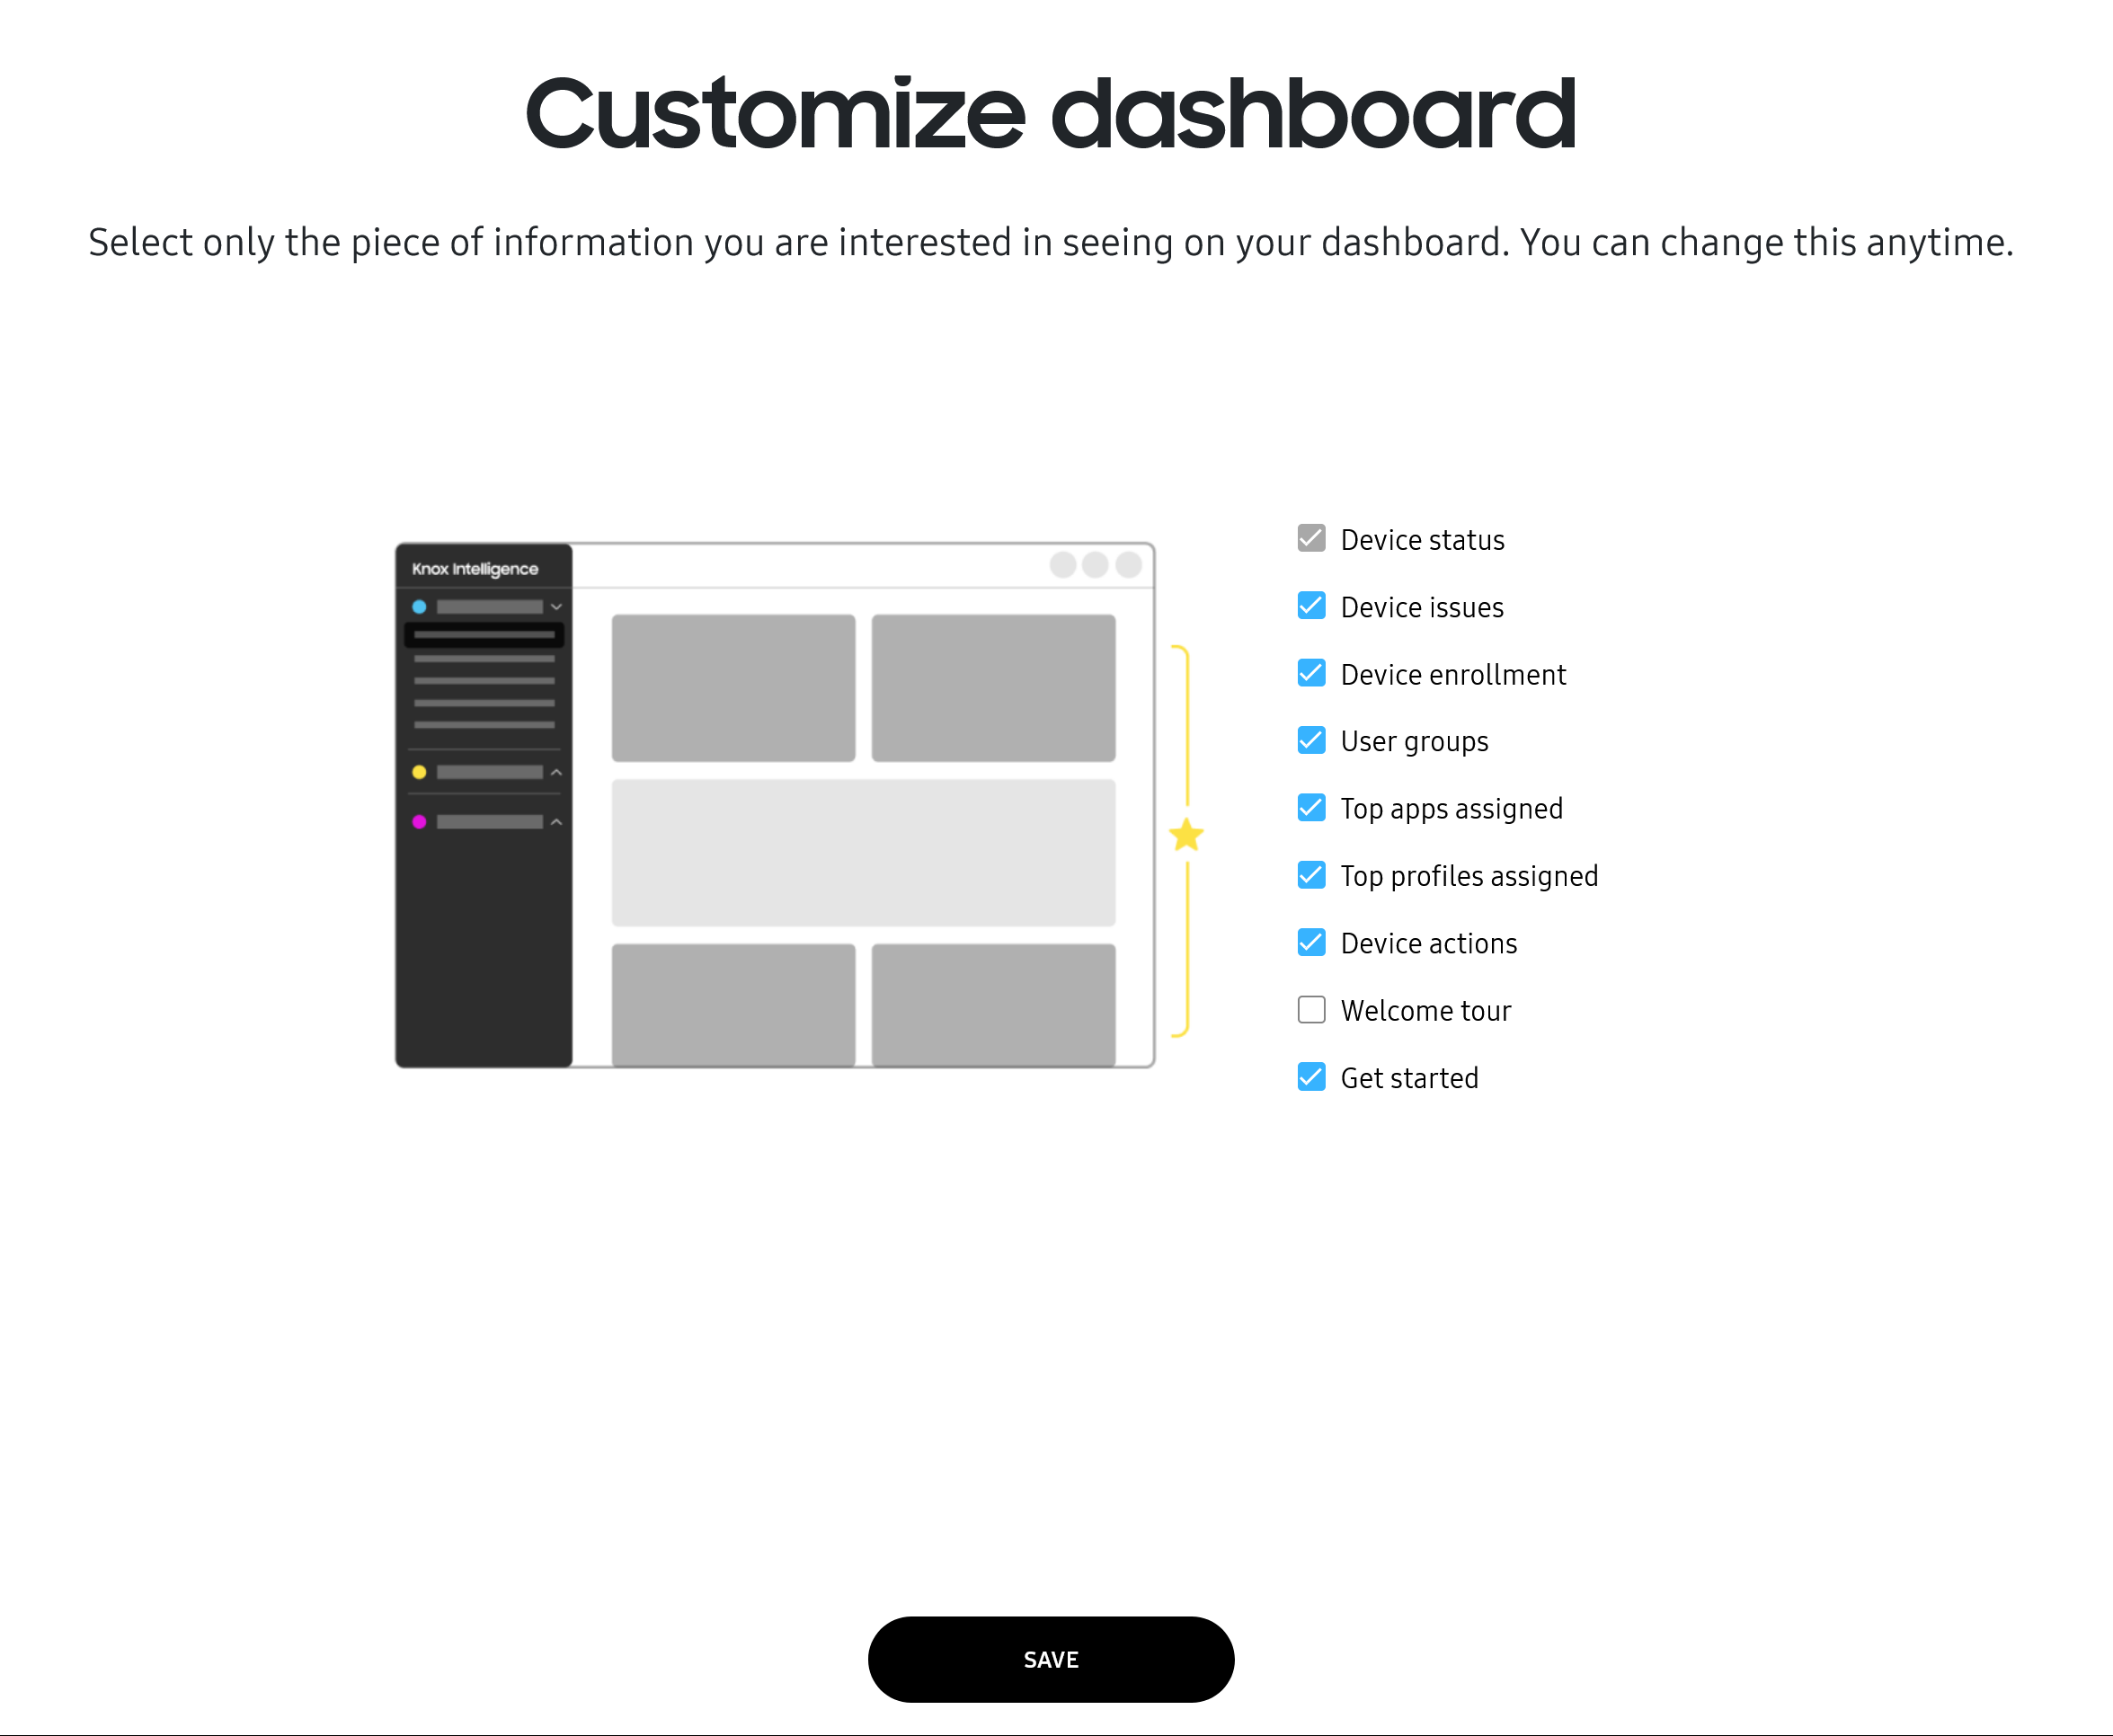 Customize dashboard page